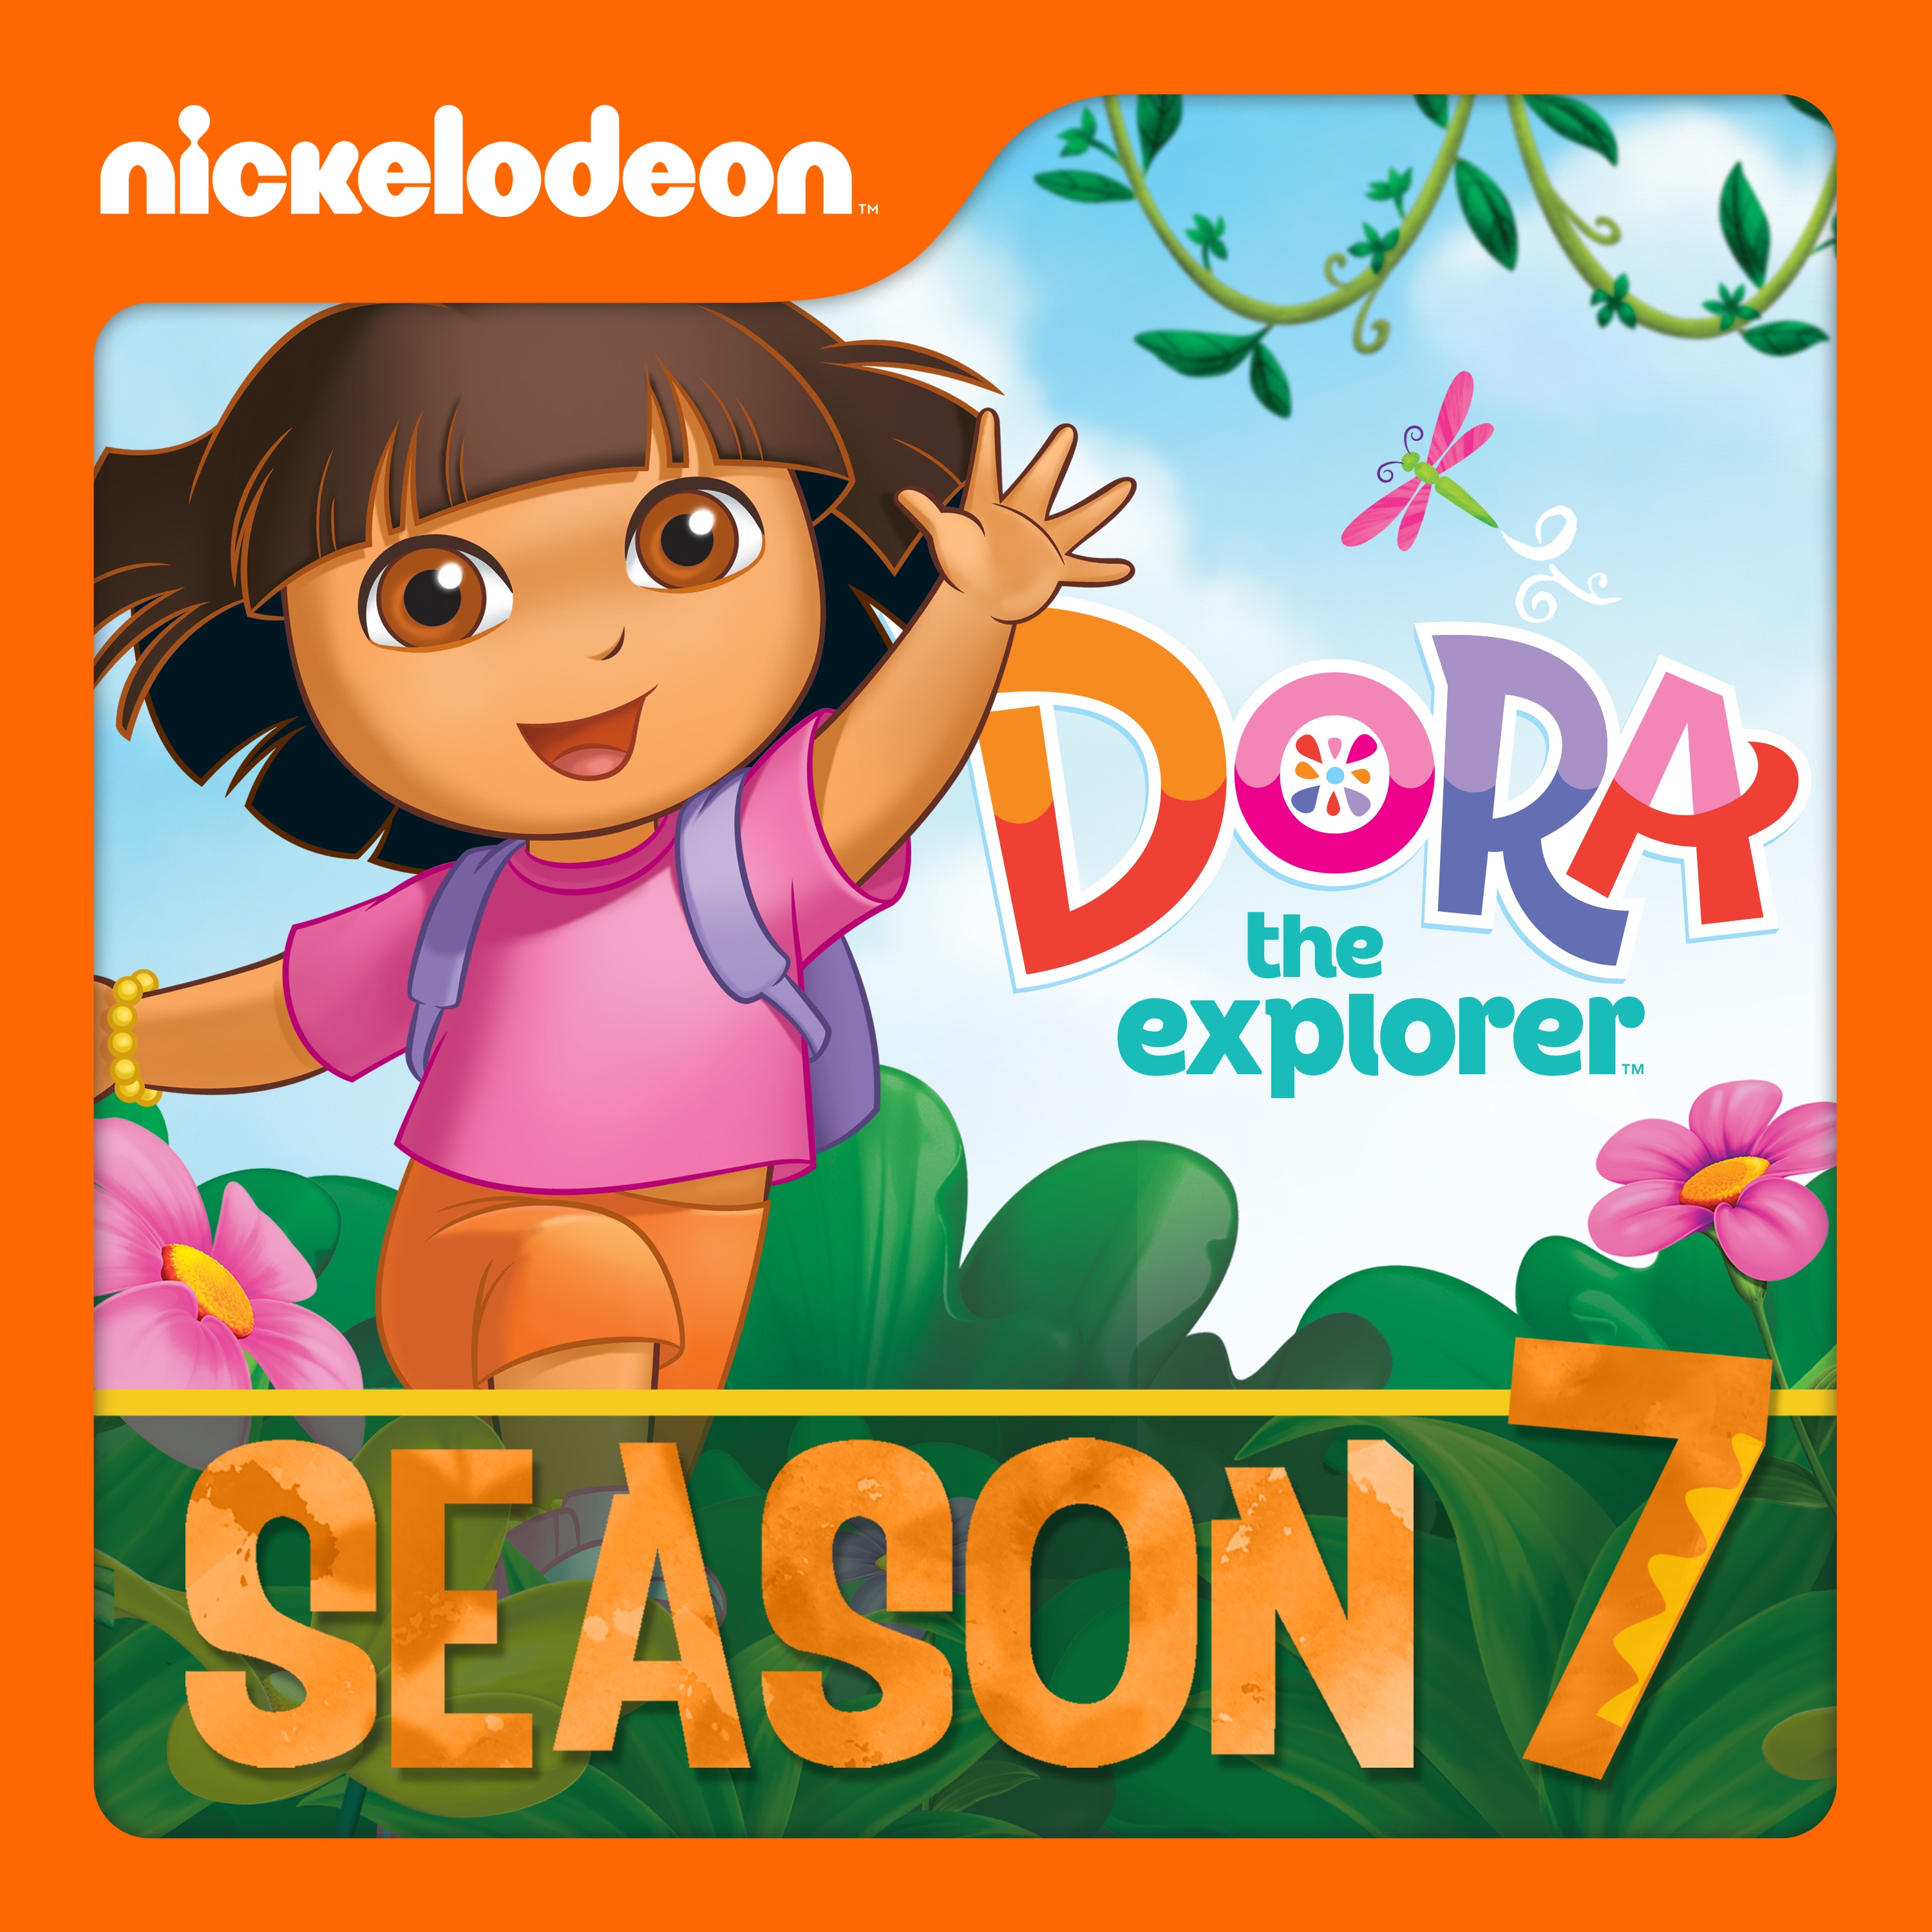 dora the explorer season 2